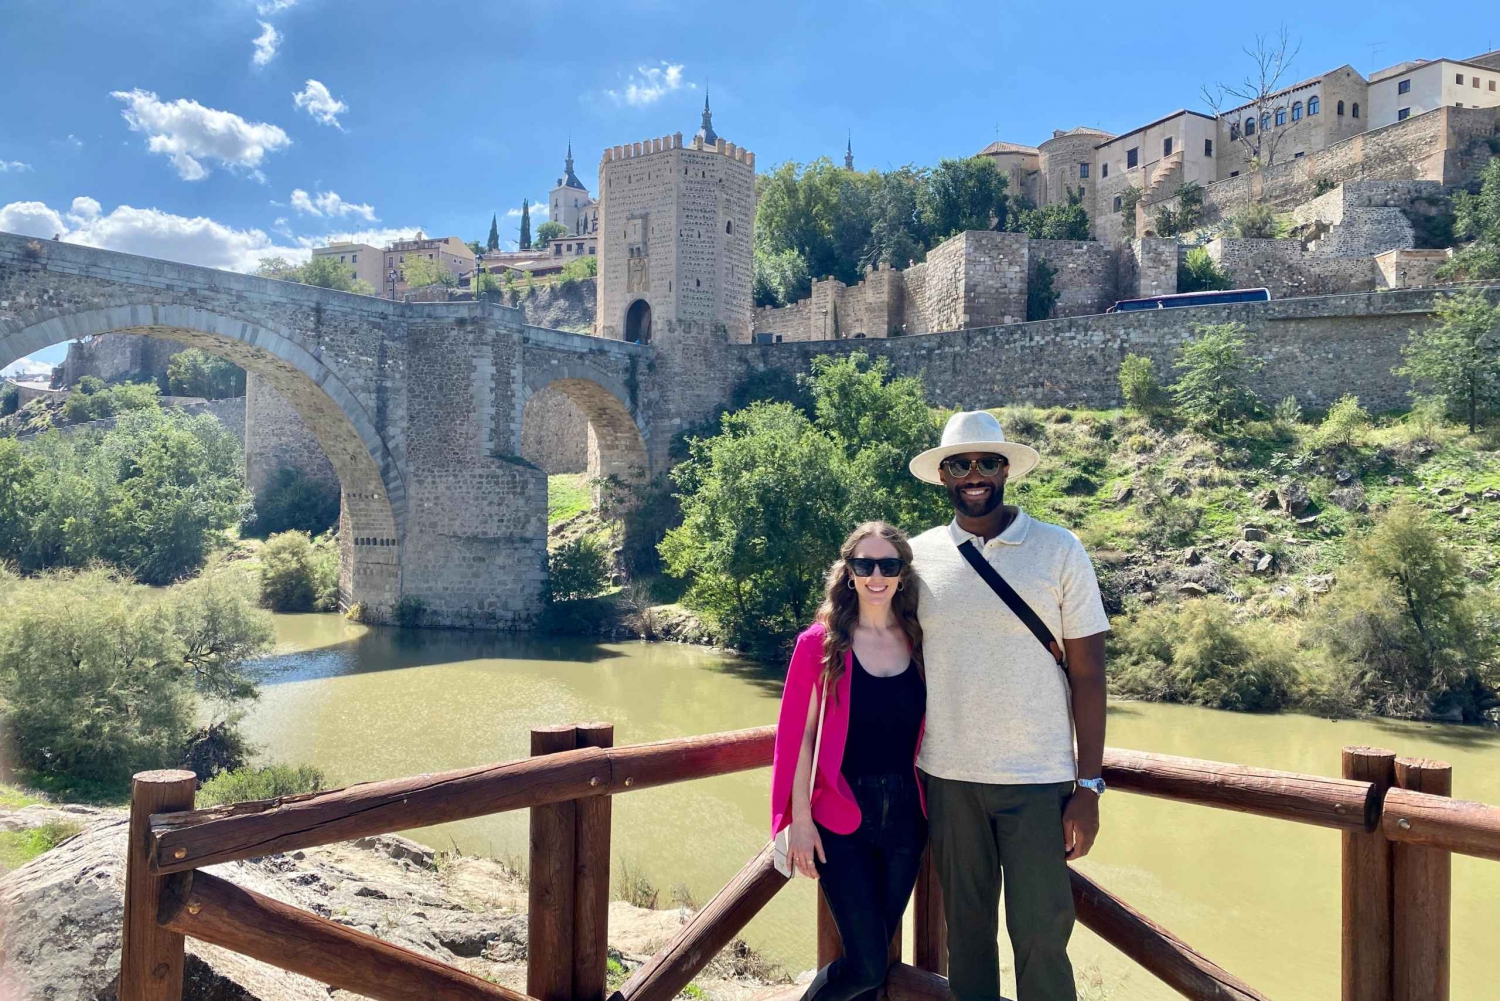 Tour Toledo y Segovia, 8 destinos imprescindibles (rundtur i Toledo og Segovia)